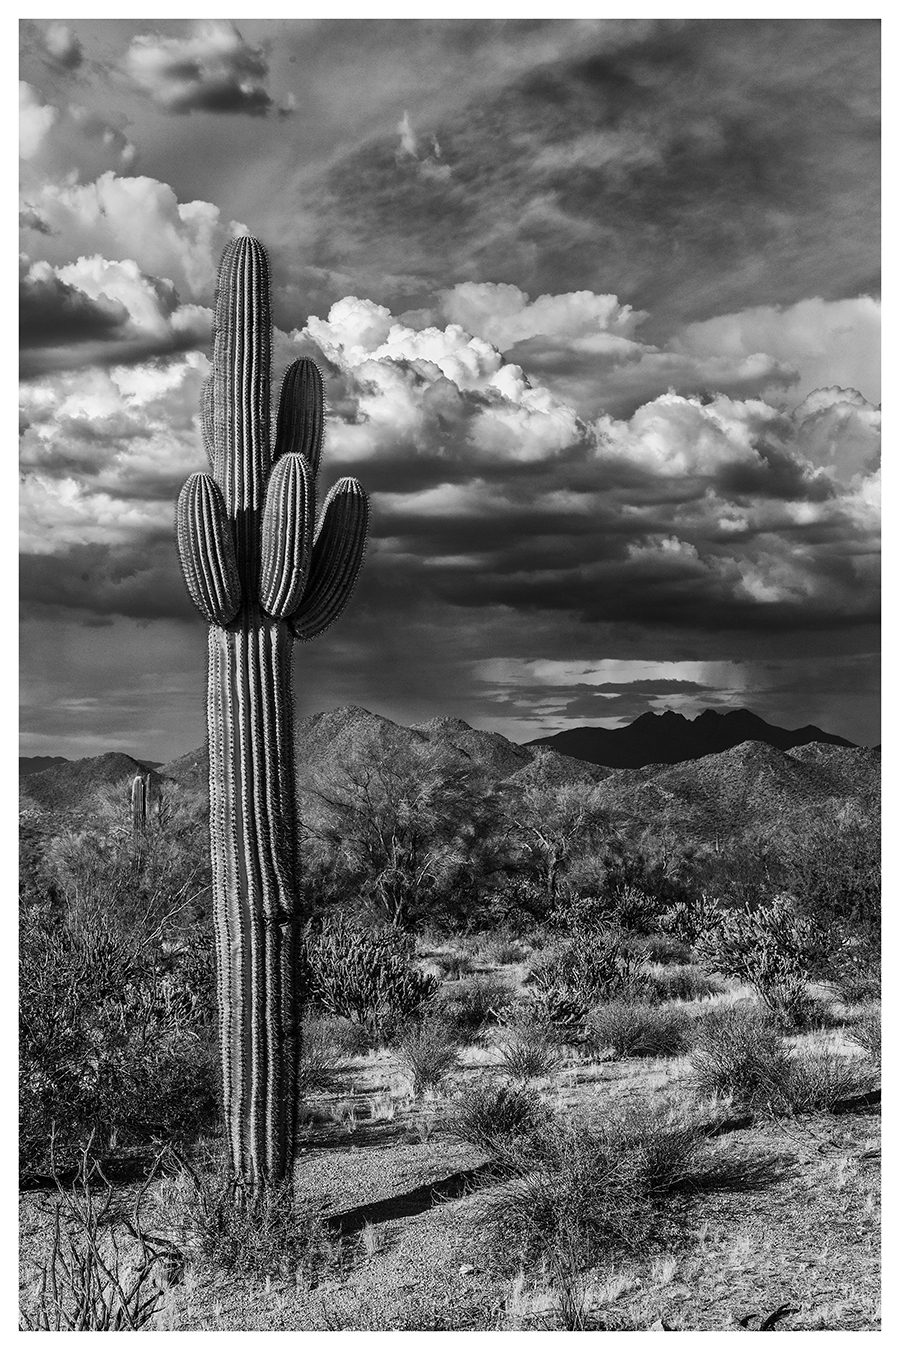 Cactus and Clouds by Robert Malarz (USA)